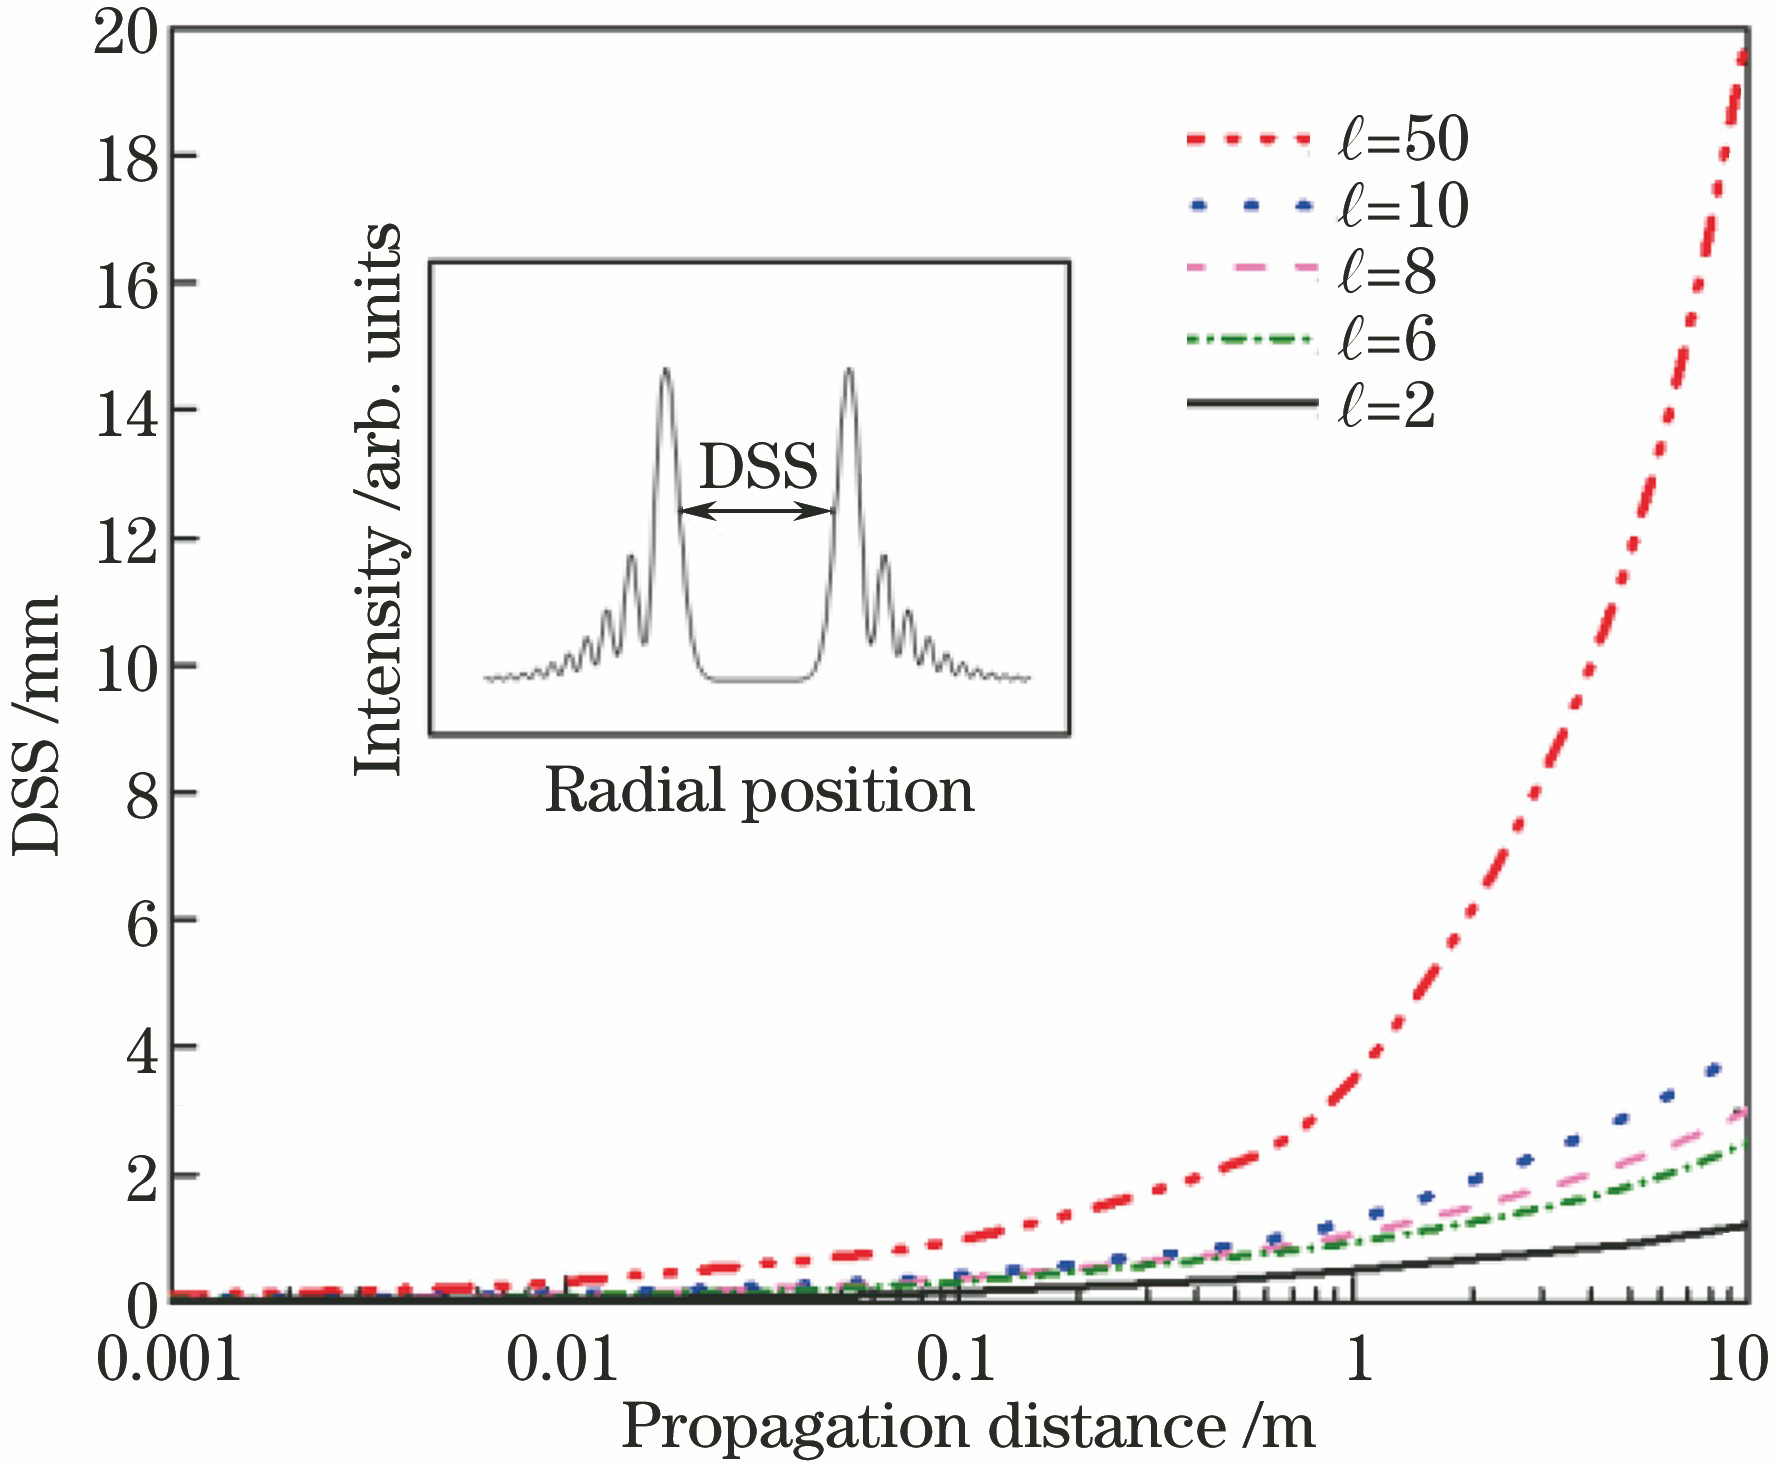 DSS of OAM beam versus propagation distance